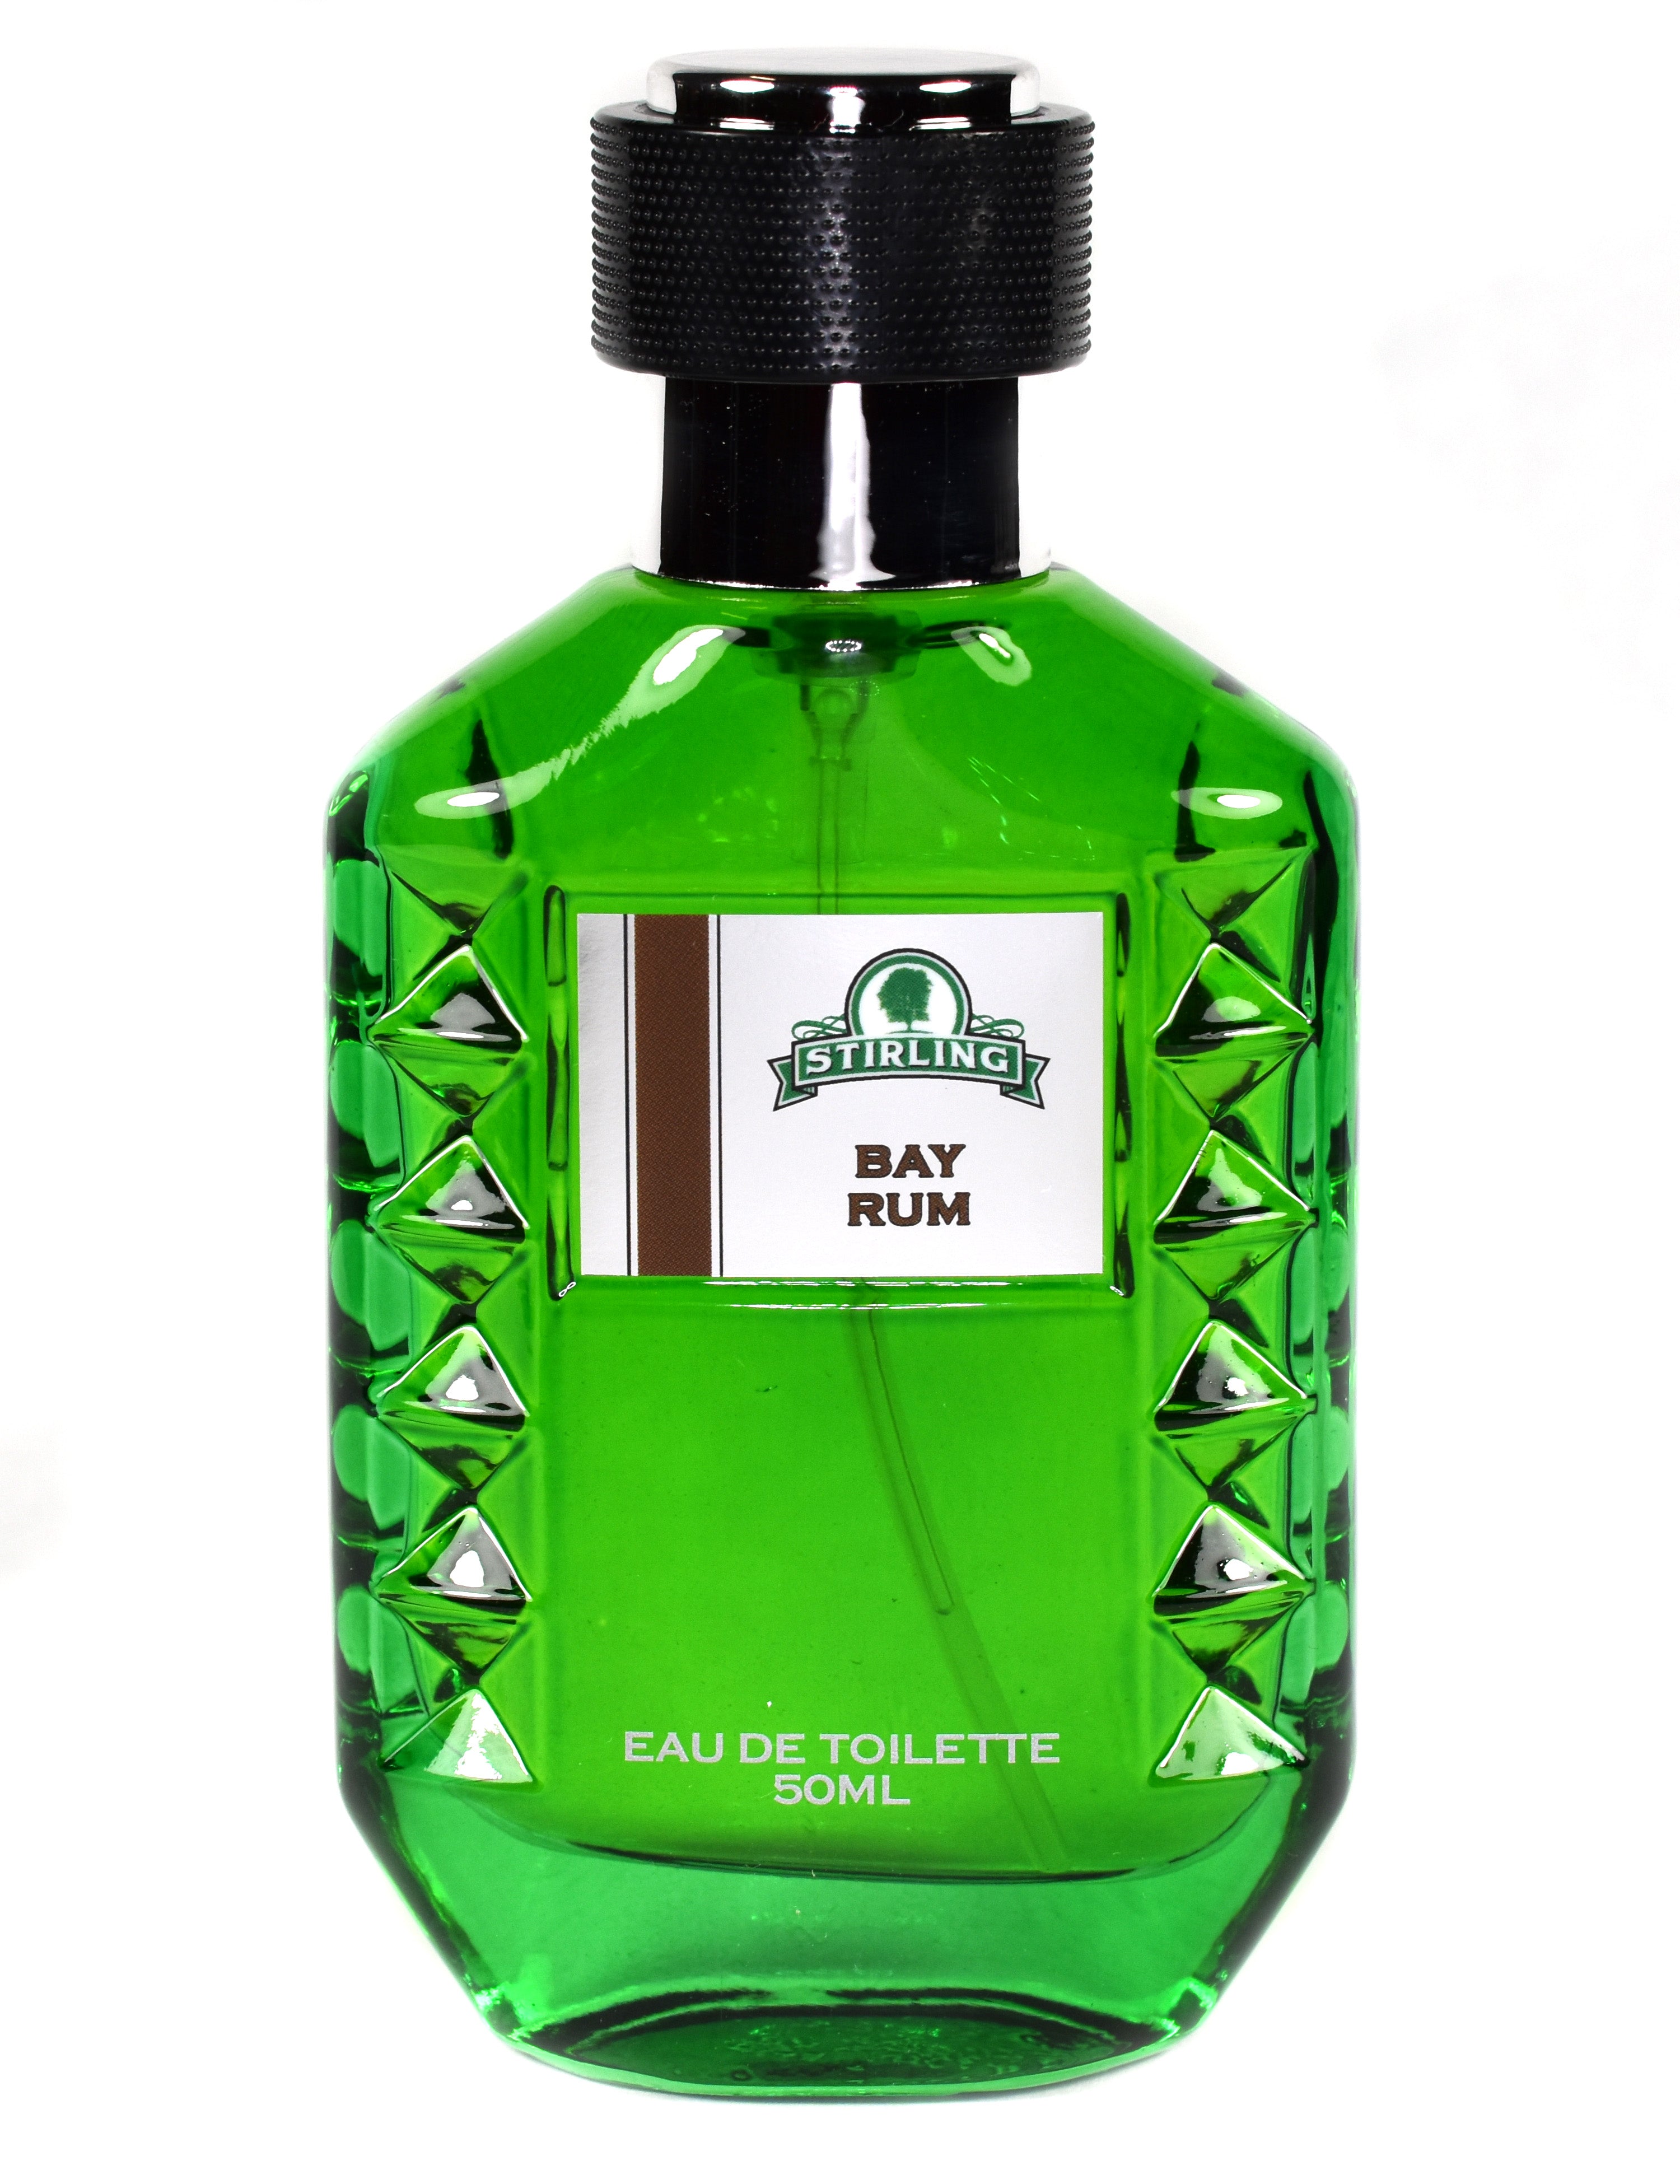  Bay Rum Premium Grade Fragrance Oil - Scented Oil